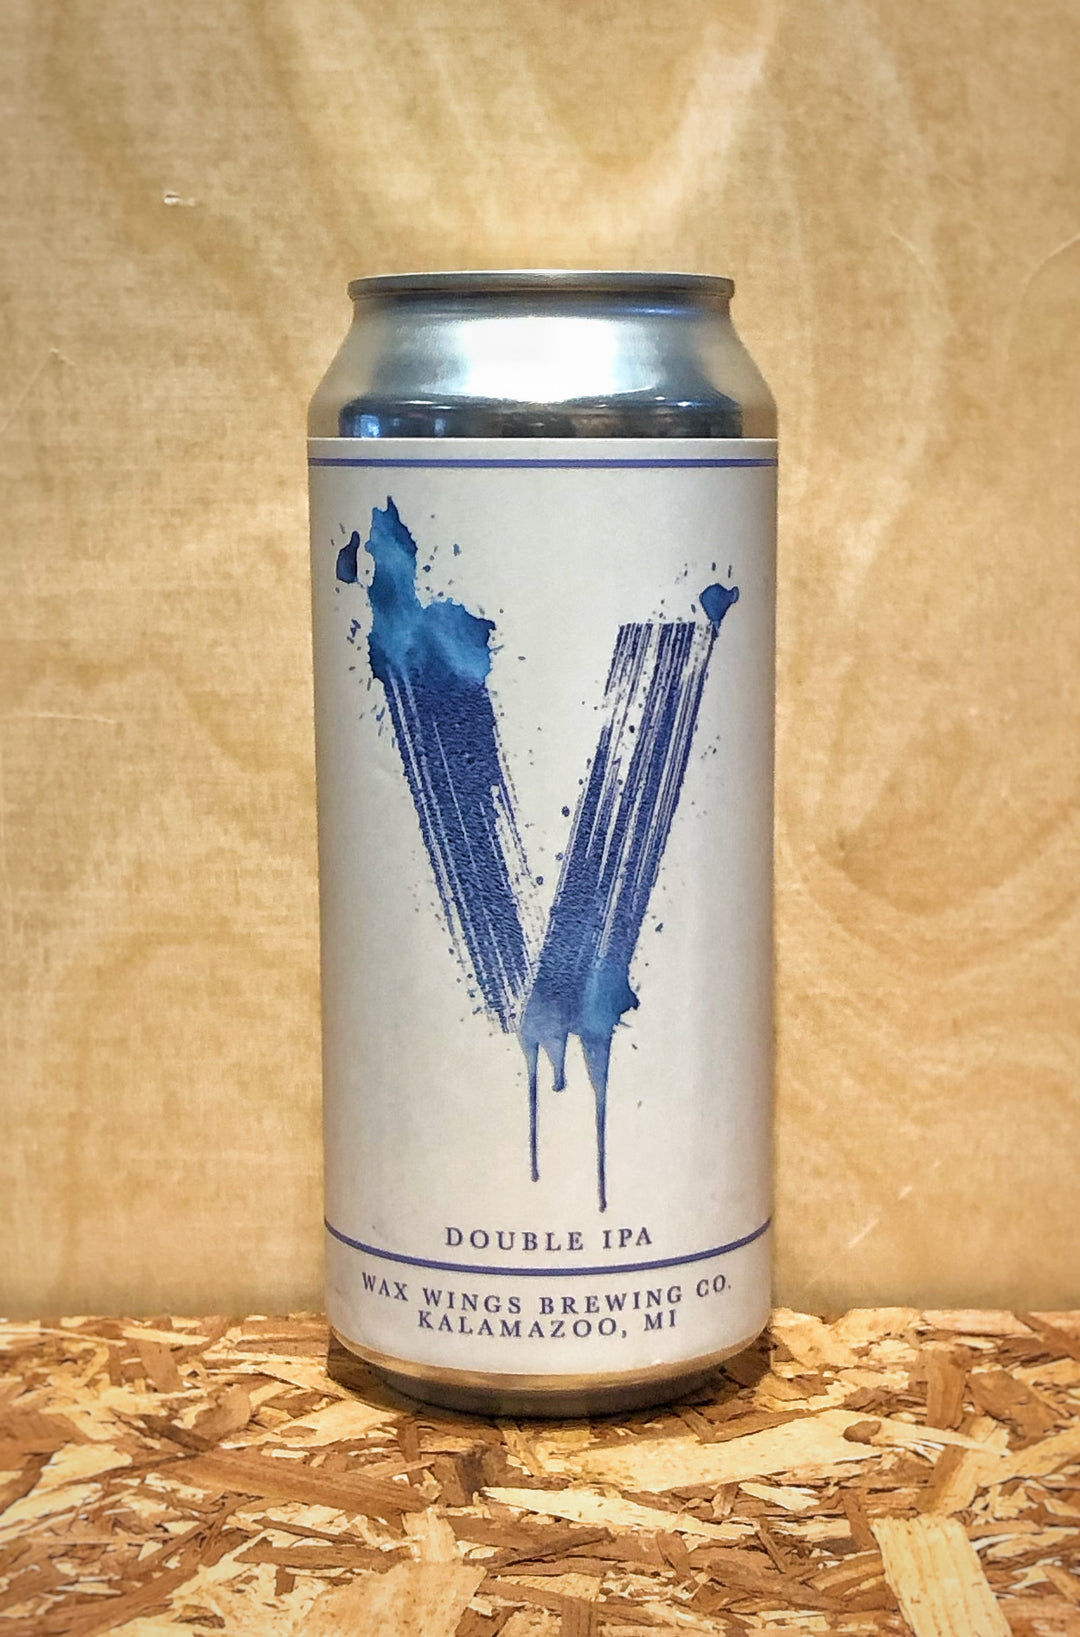 Wax Wings Brewing Co. 'V' Double IPA (Kalamazoo, MI)